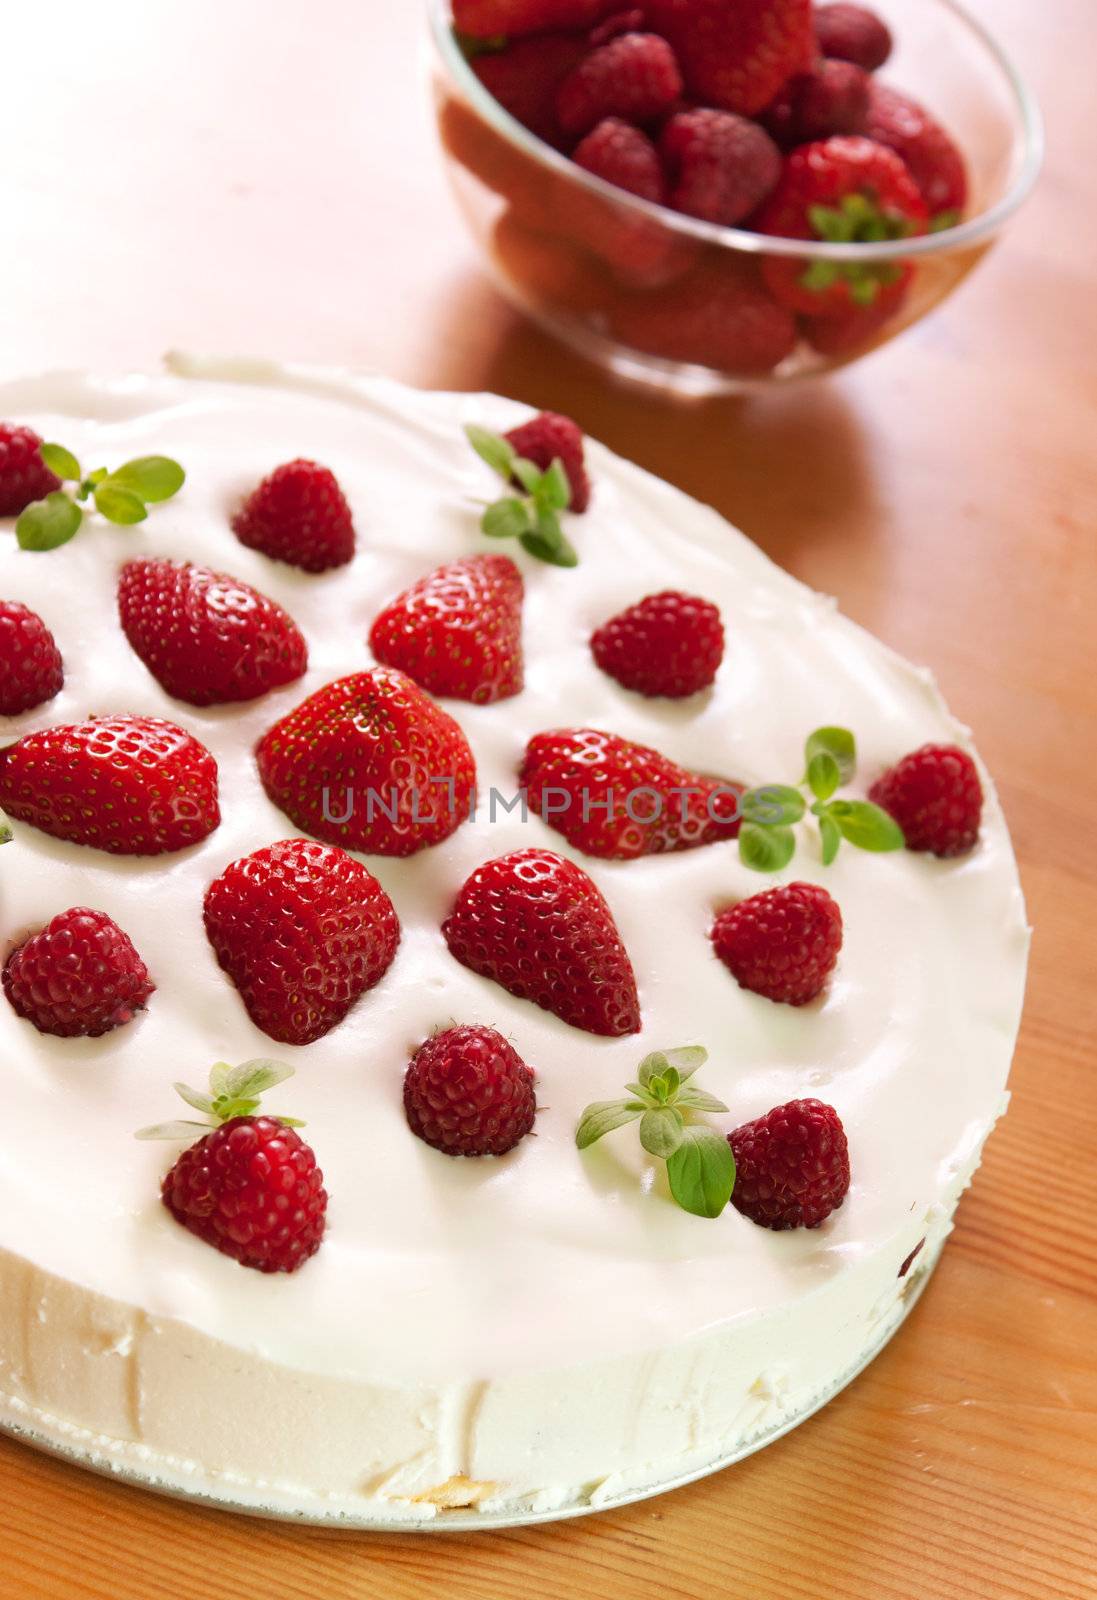 Strawberry and raspberry cake by TristanBM